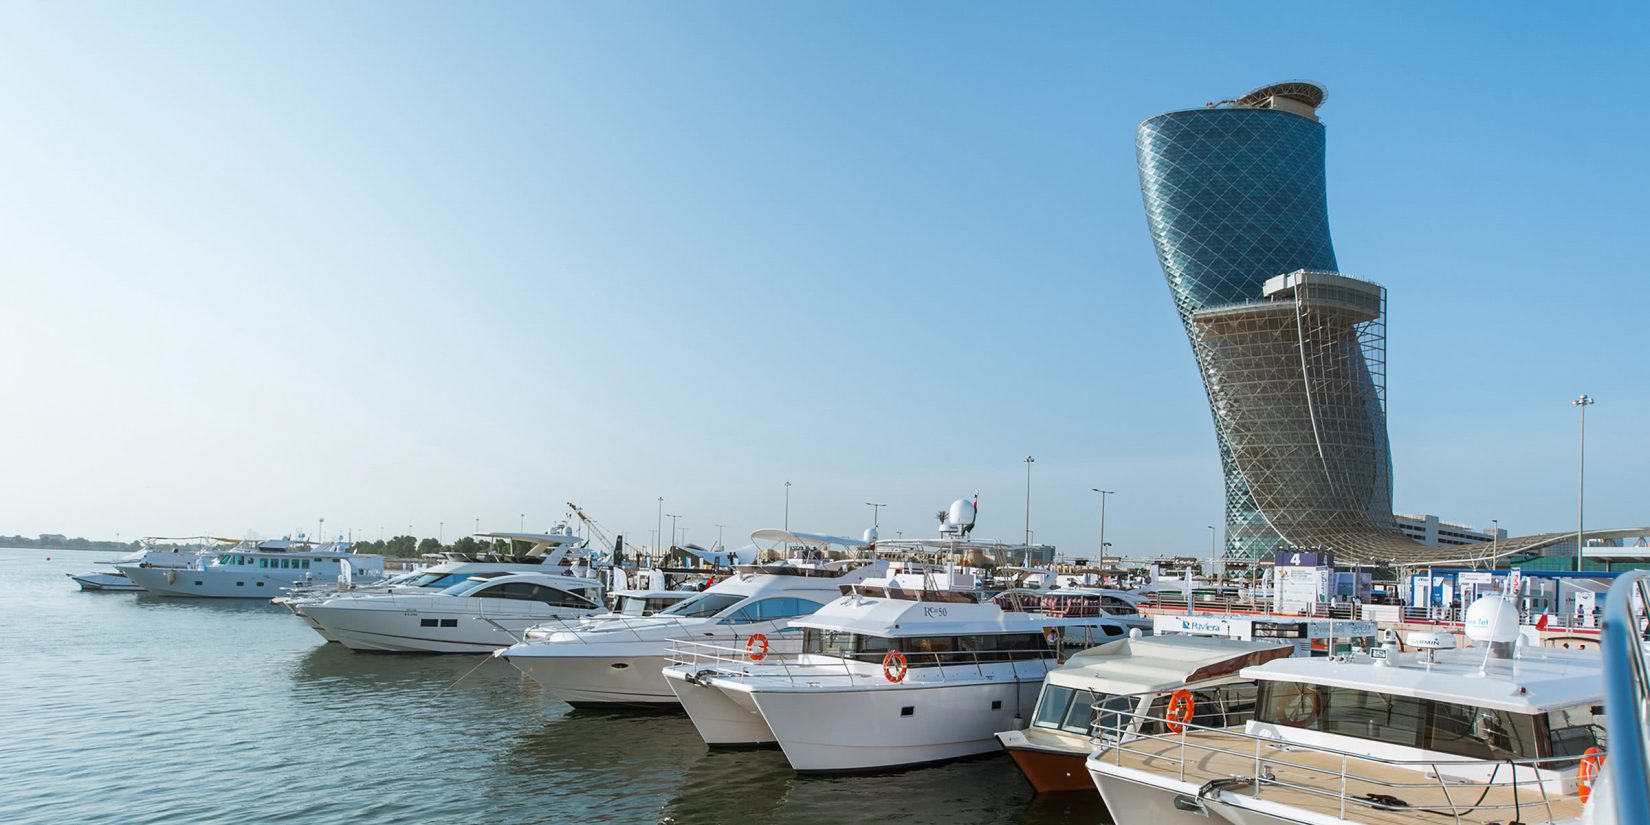 Abu Dhabi International Boat Show 2021 - Luxe Digital